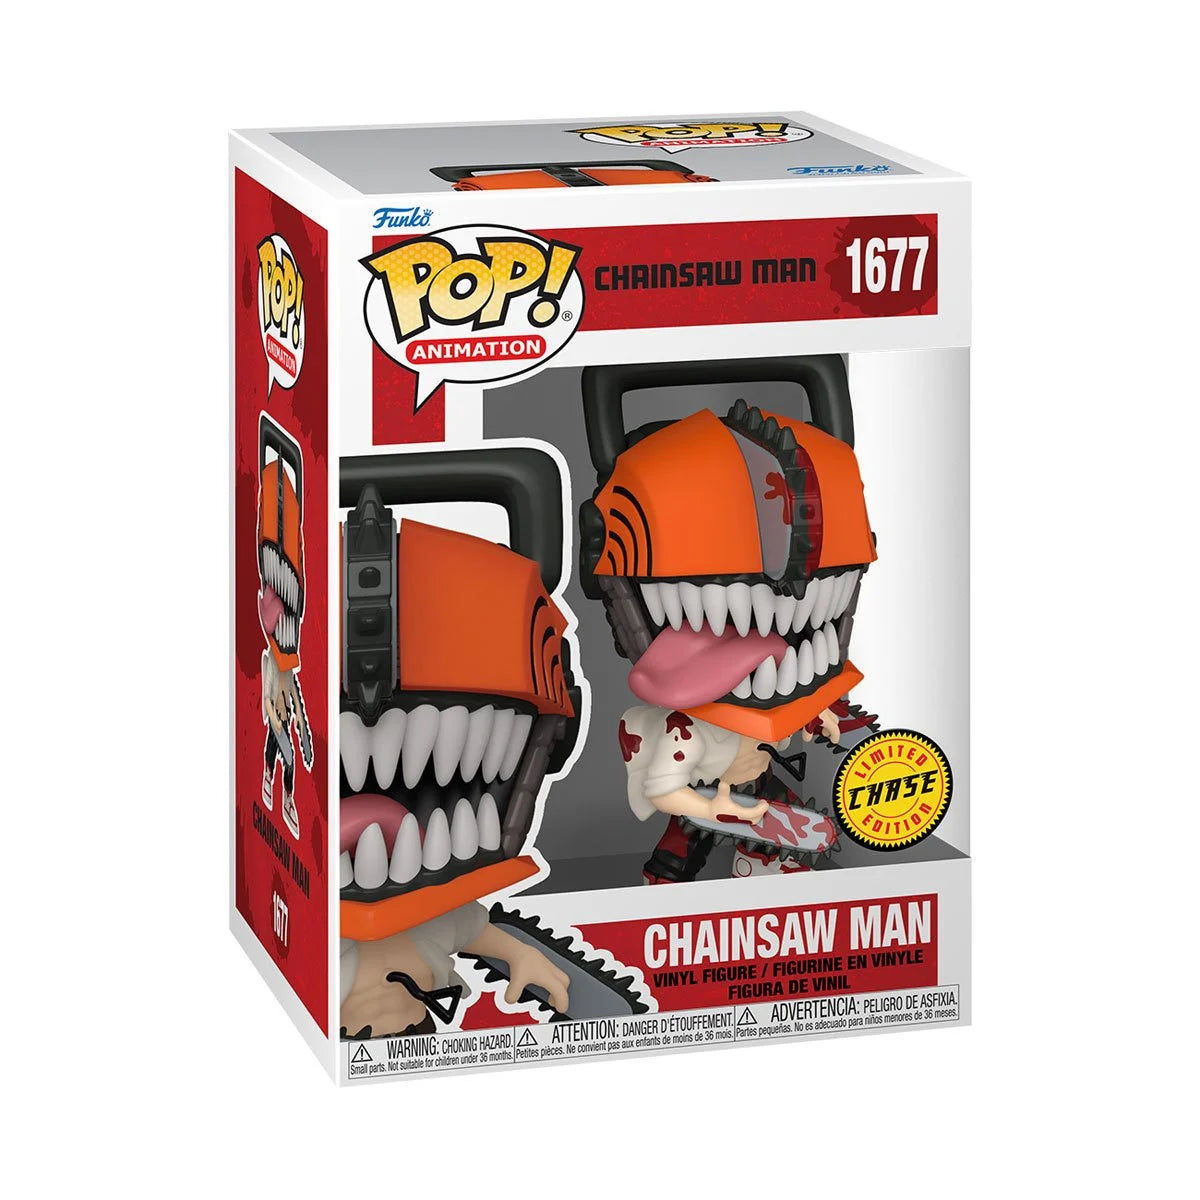 Chainsaw Man - Chainsaw Man Funko Pop!